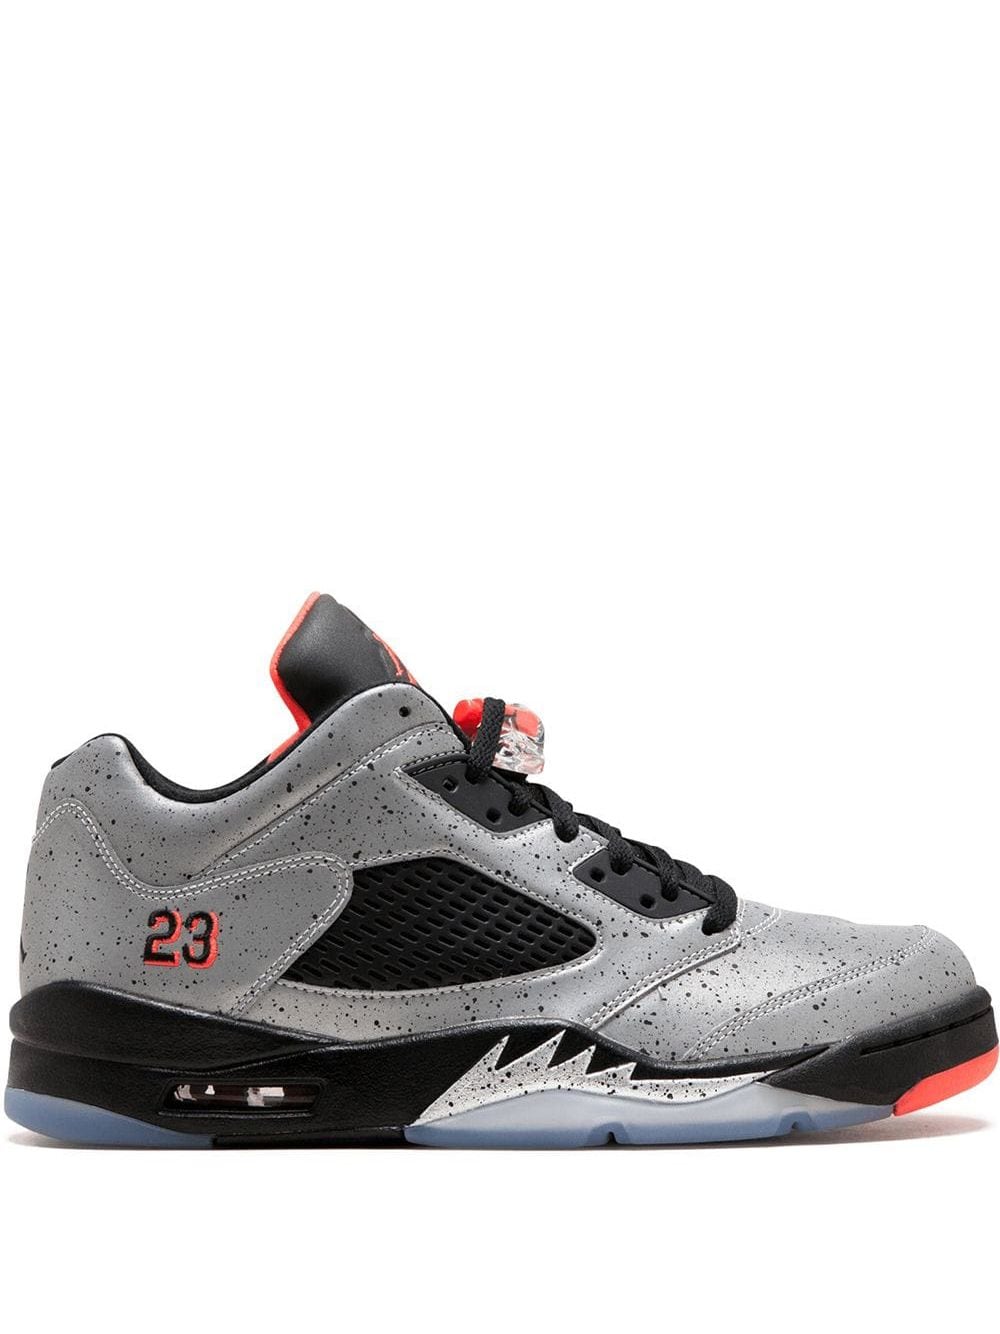 Jordan x Neymar Air Jordan 5 Retro Low sneakers - Grey von Jordan